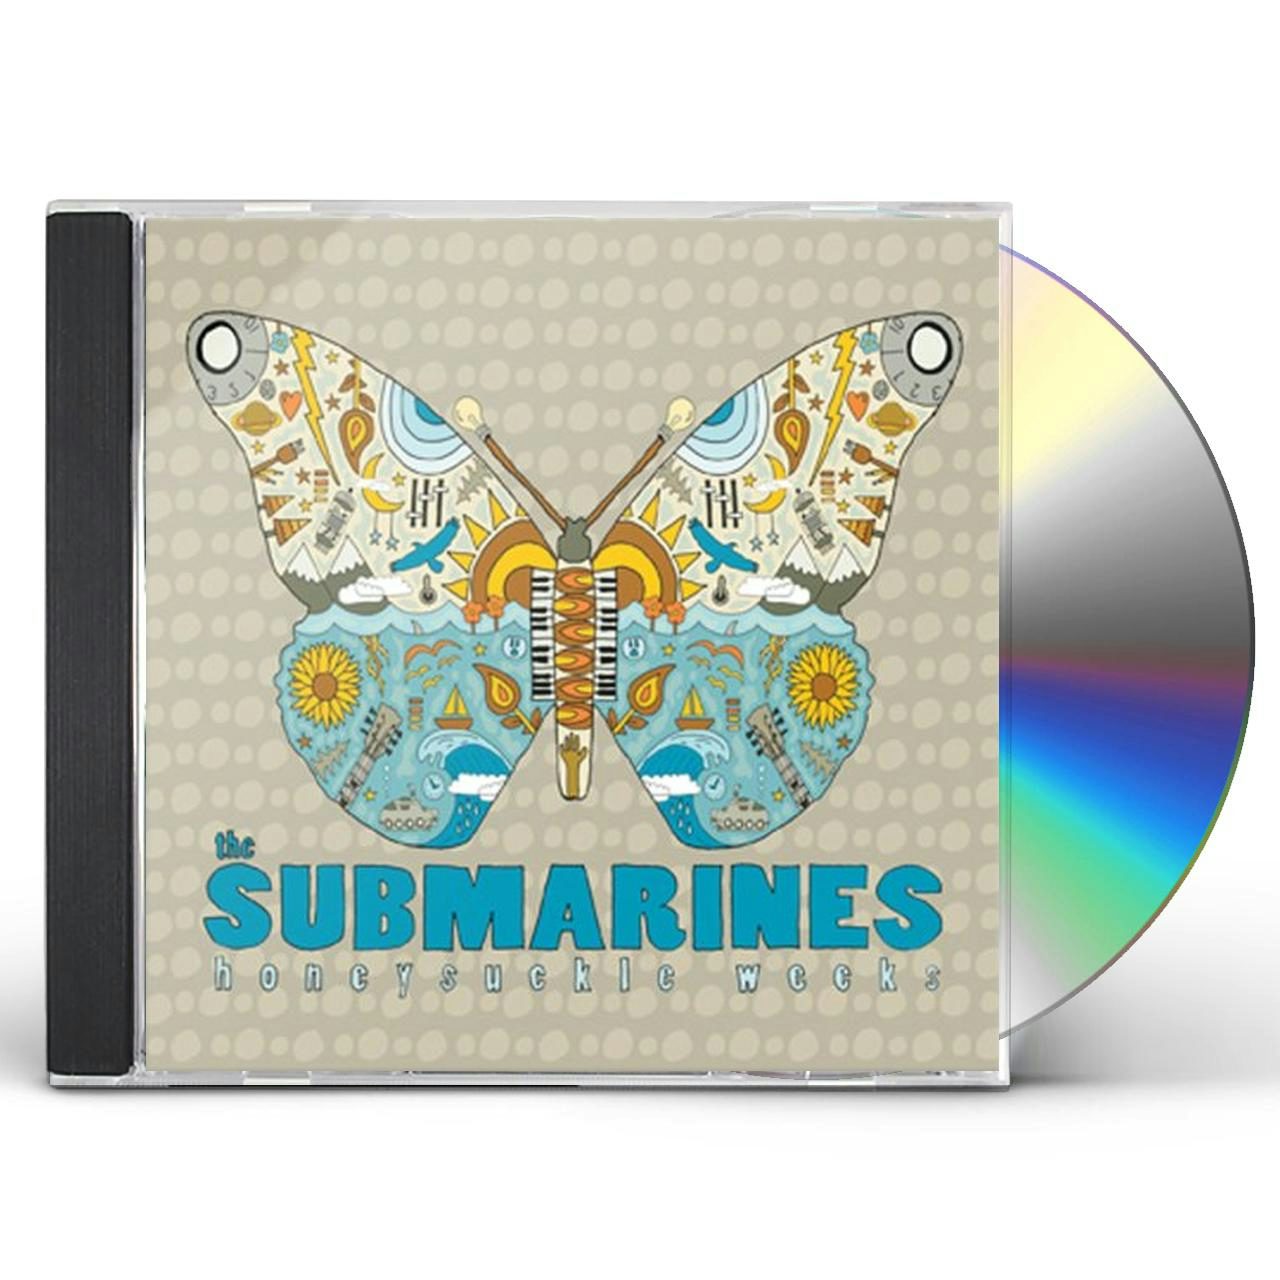 The Submarines HONEYSUCKLE WEEKS CD $11.99$9.99